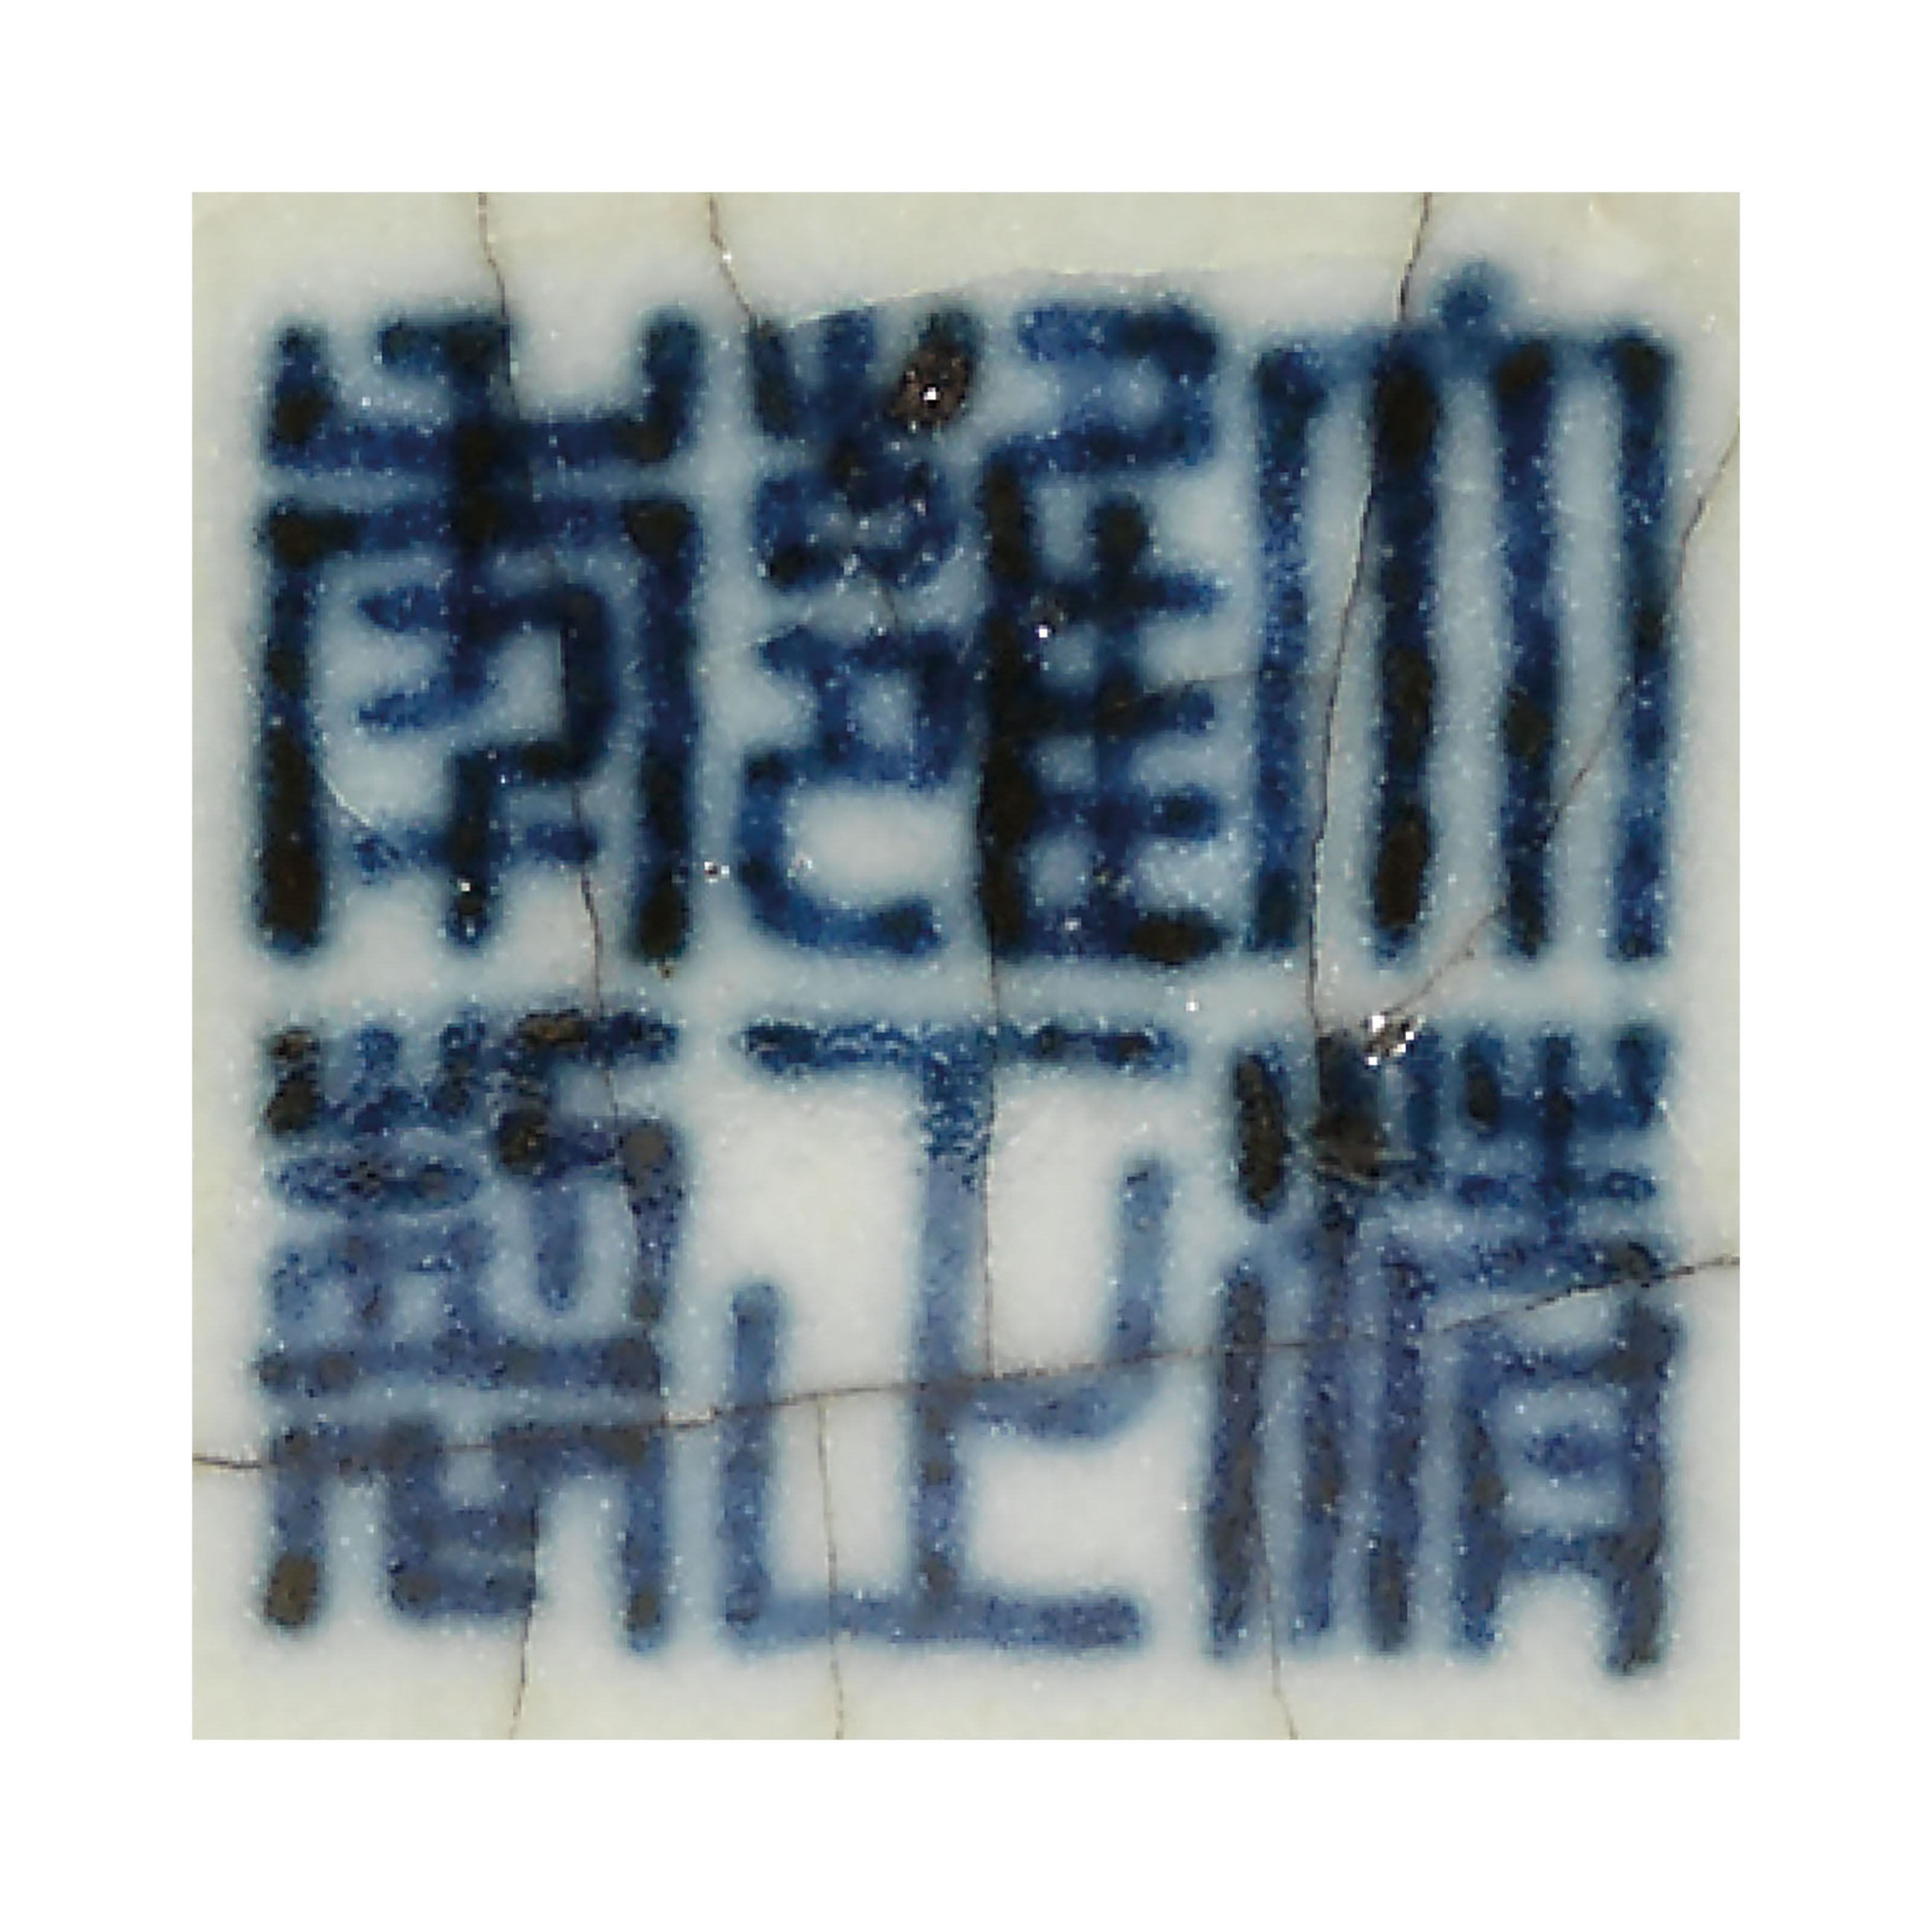 佳士得 拍卖 17741 私人珍藏重要中国瓷器 香港|2019年11月27日 拍品2901 A FINE AND RARE GE-TYPE GLAZED MALLET-FORM VASE YONGZHENG SIX-CHARACTER SEAL MARK IN UNDERGLAZE BLUE AND OF THE PERIOD (1723-1735)